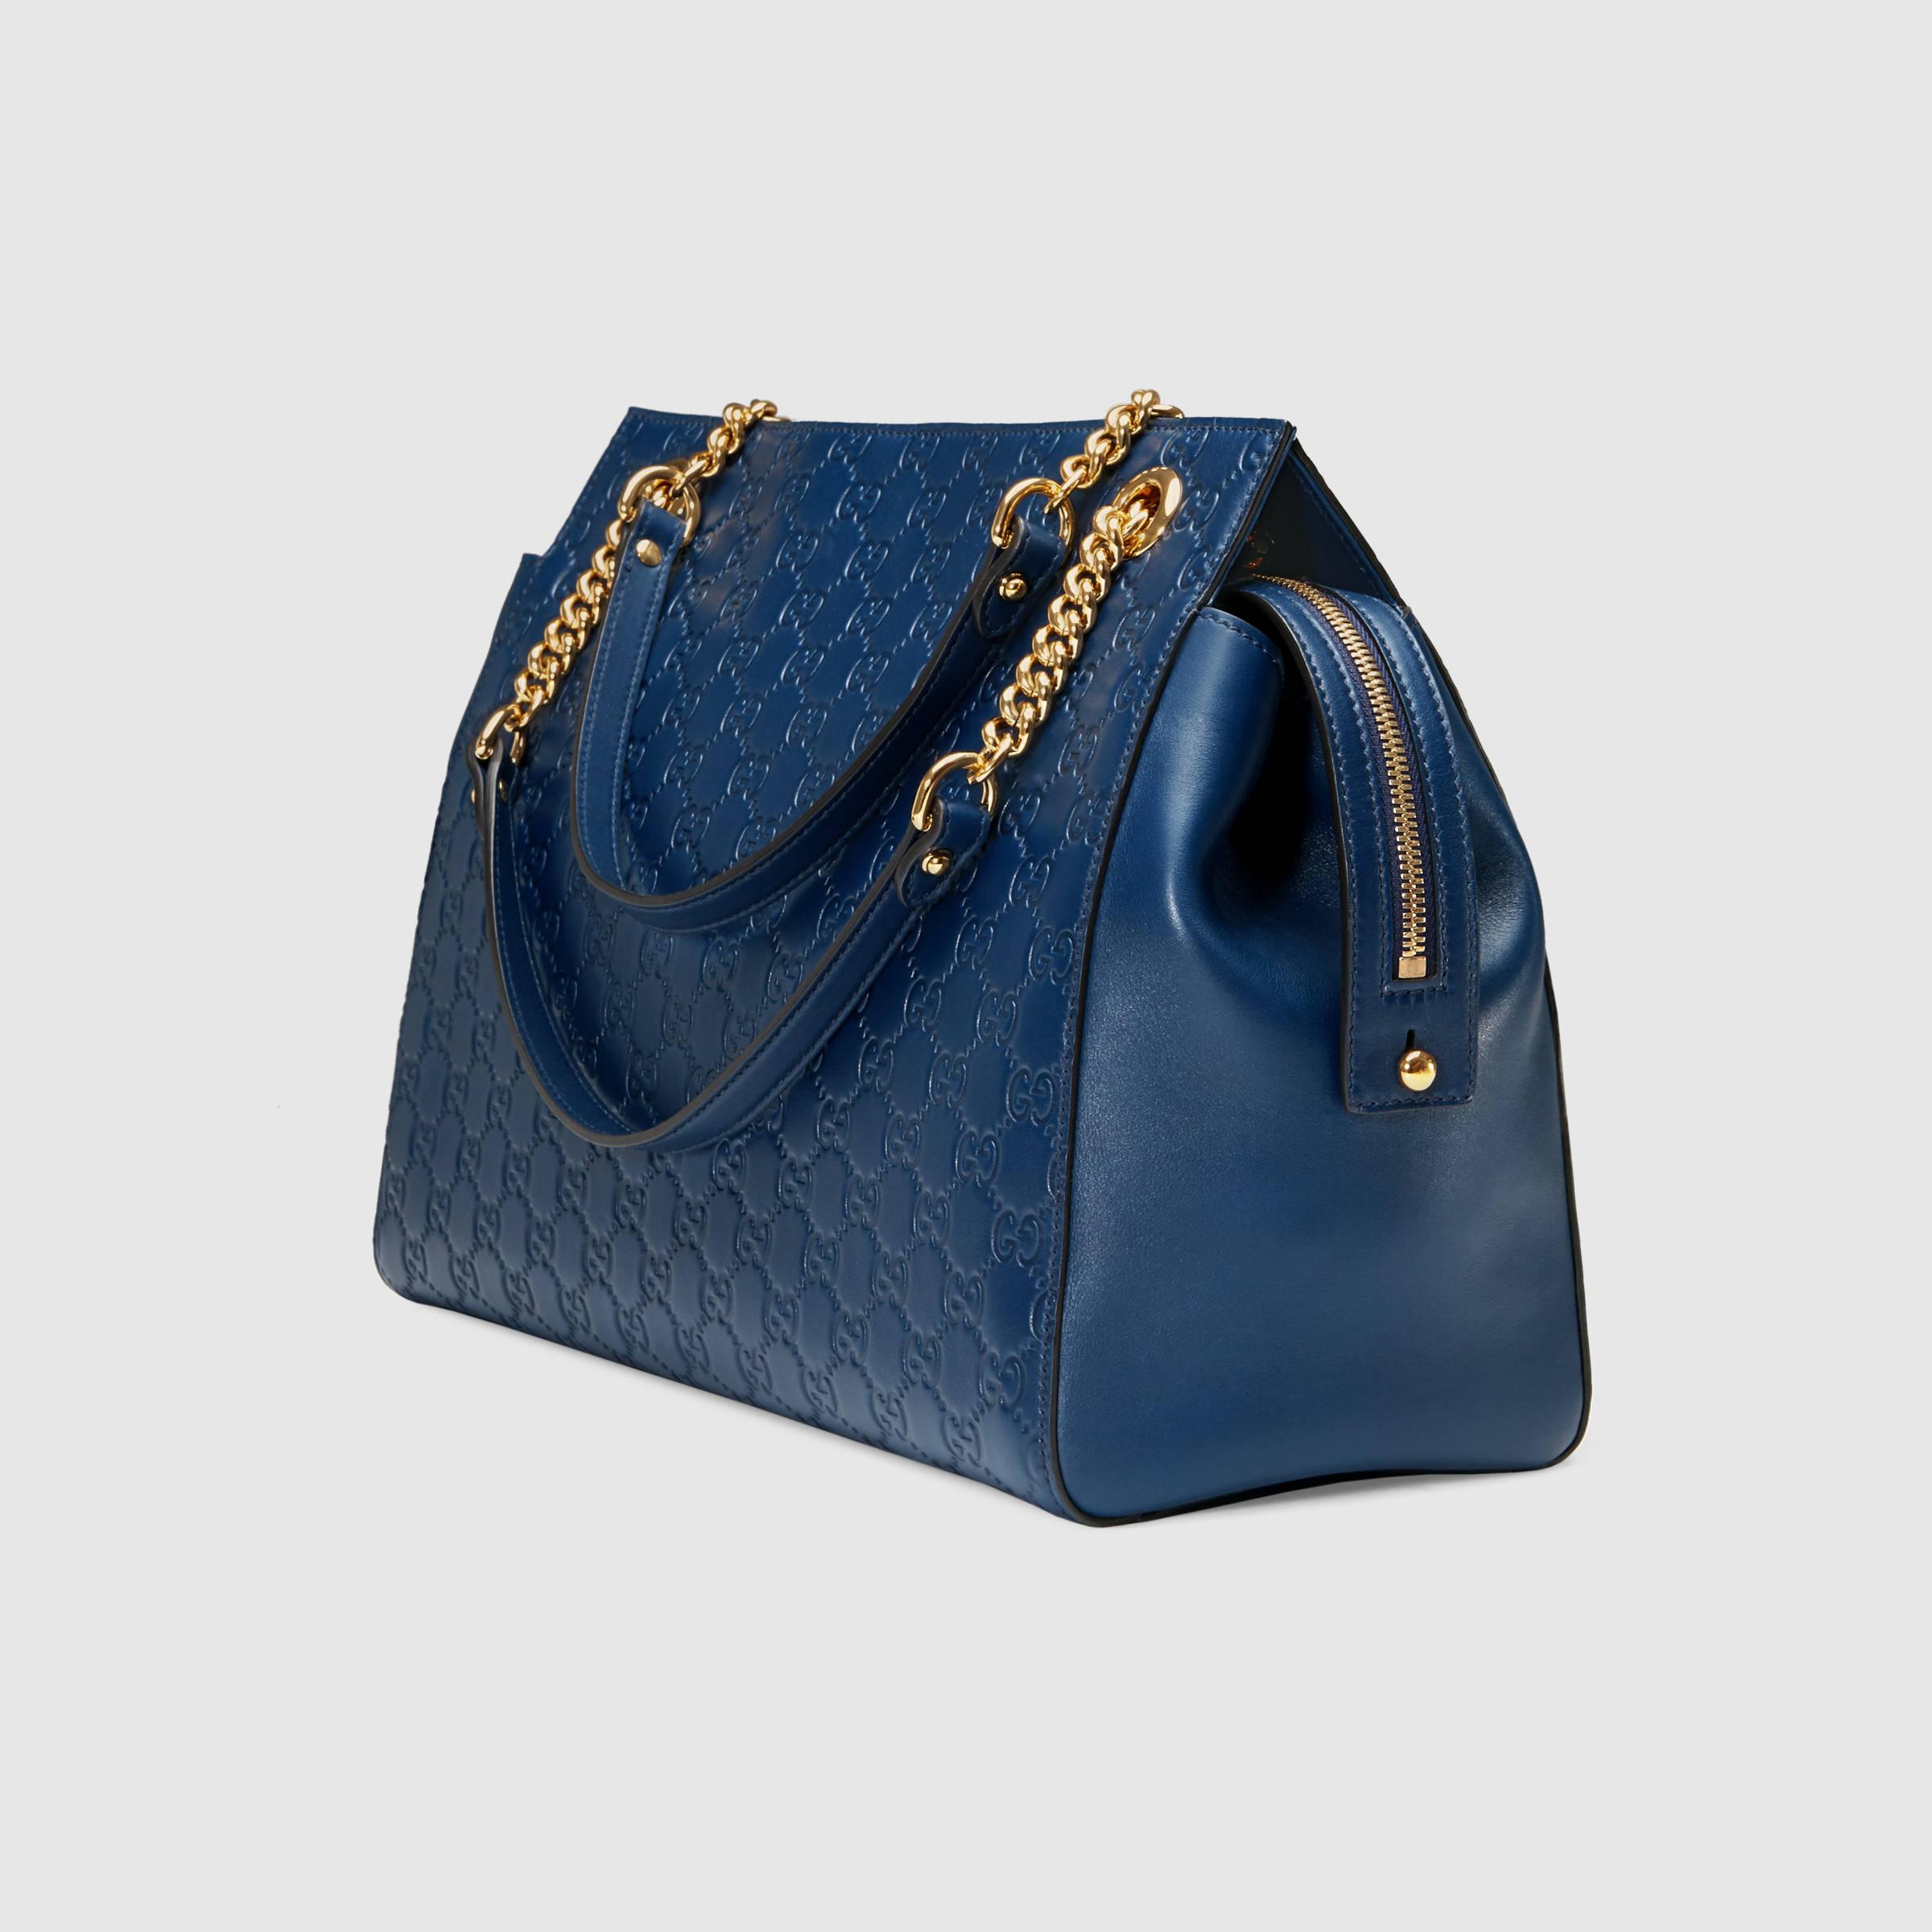 Lyst - Gucci Soft Signature Shoulder Bag in Blue